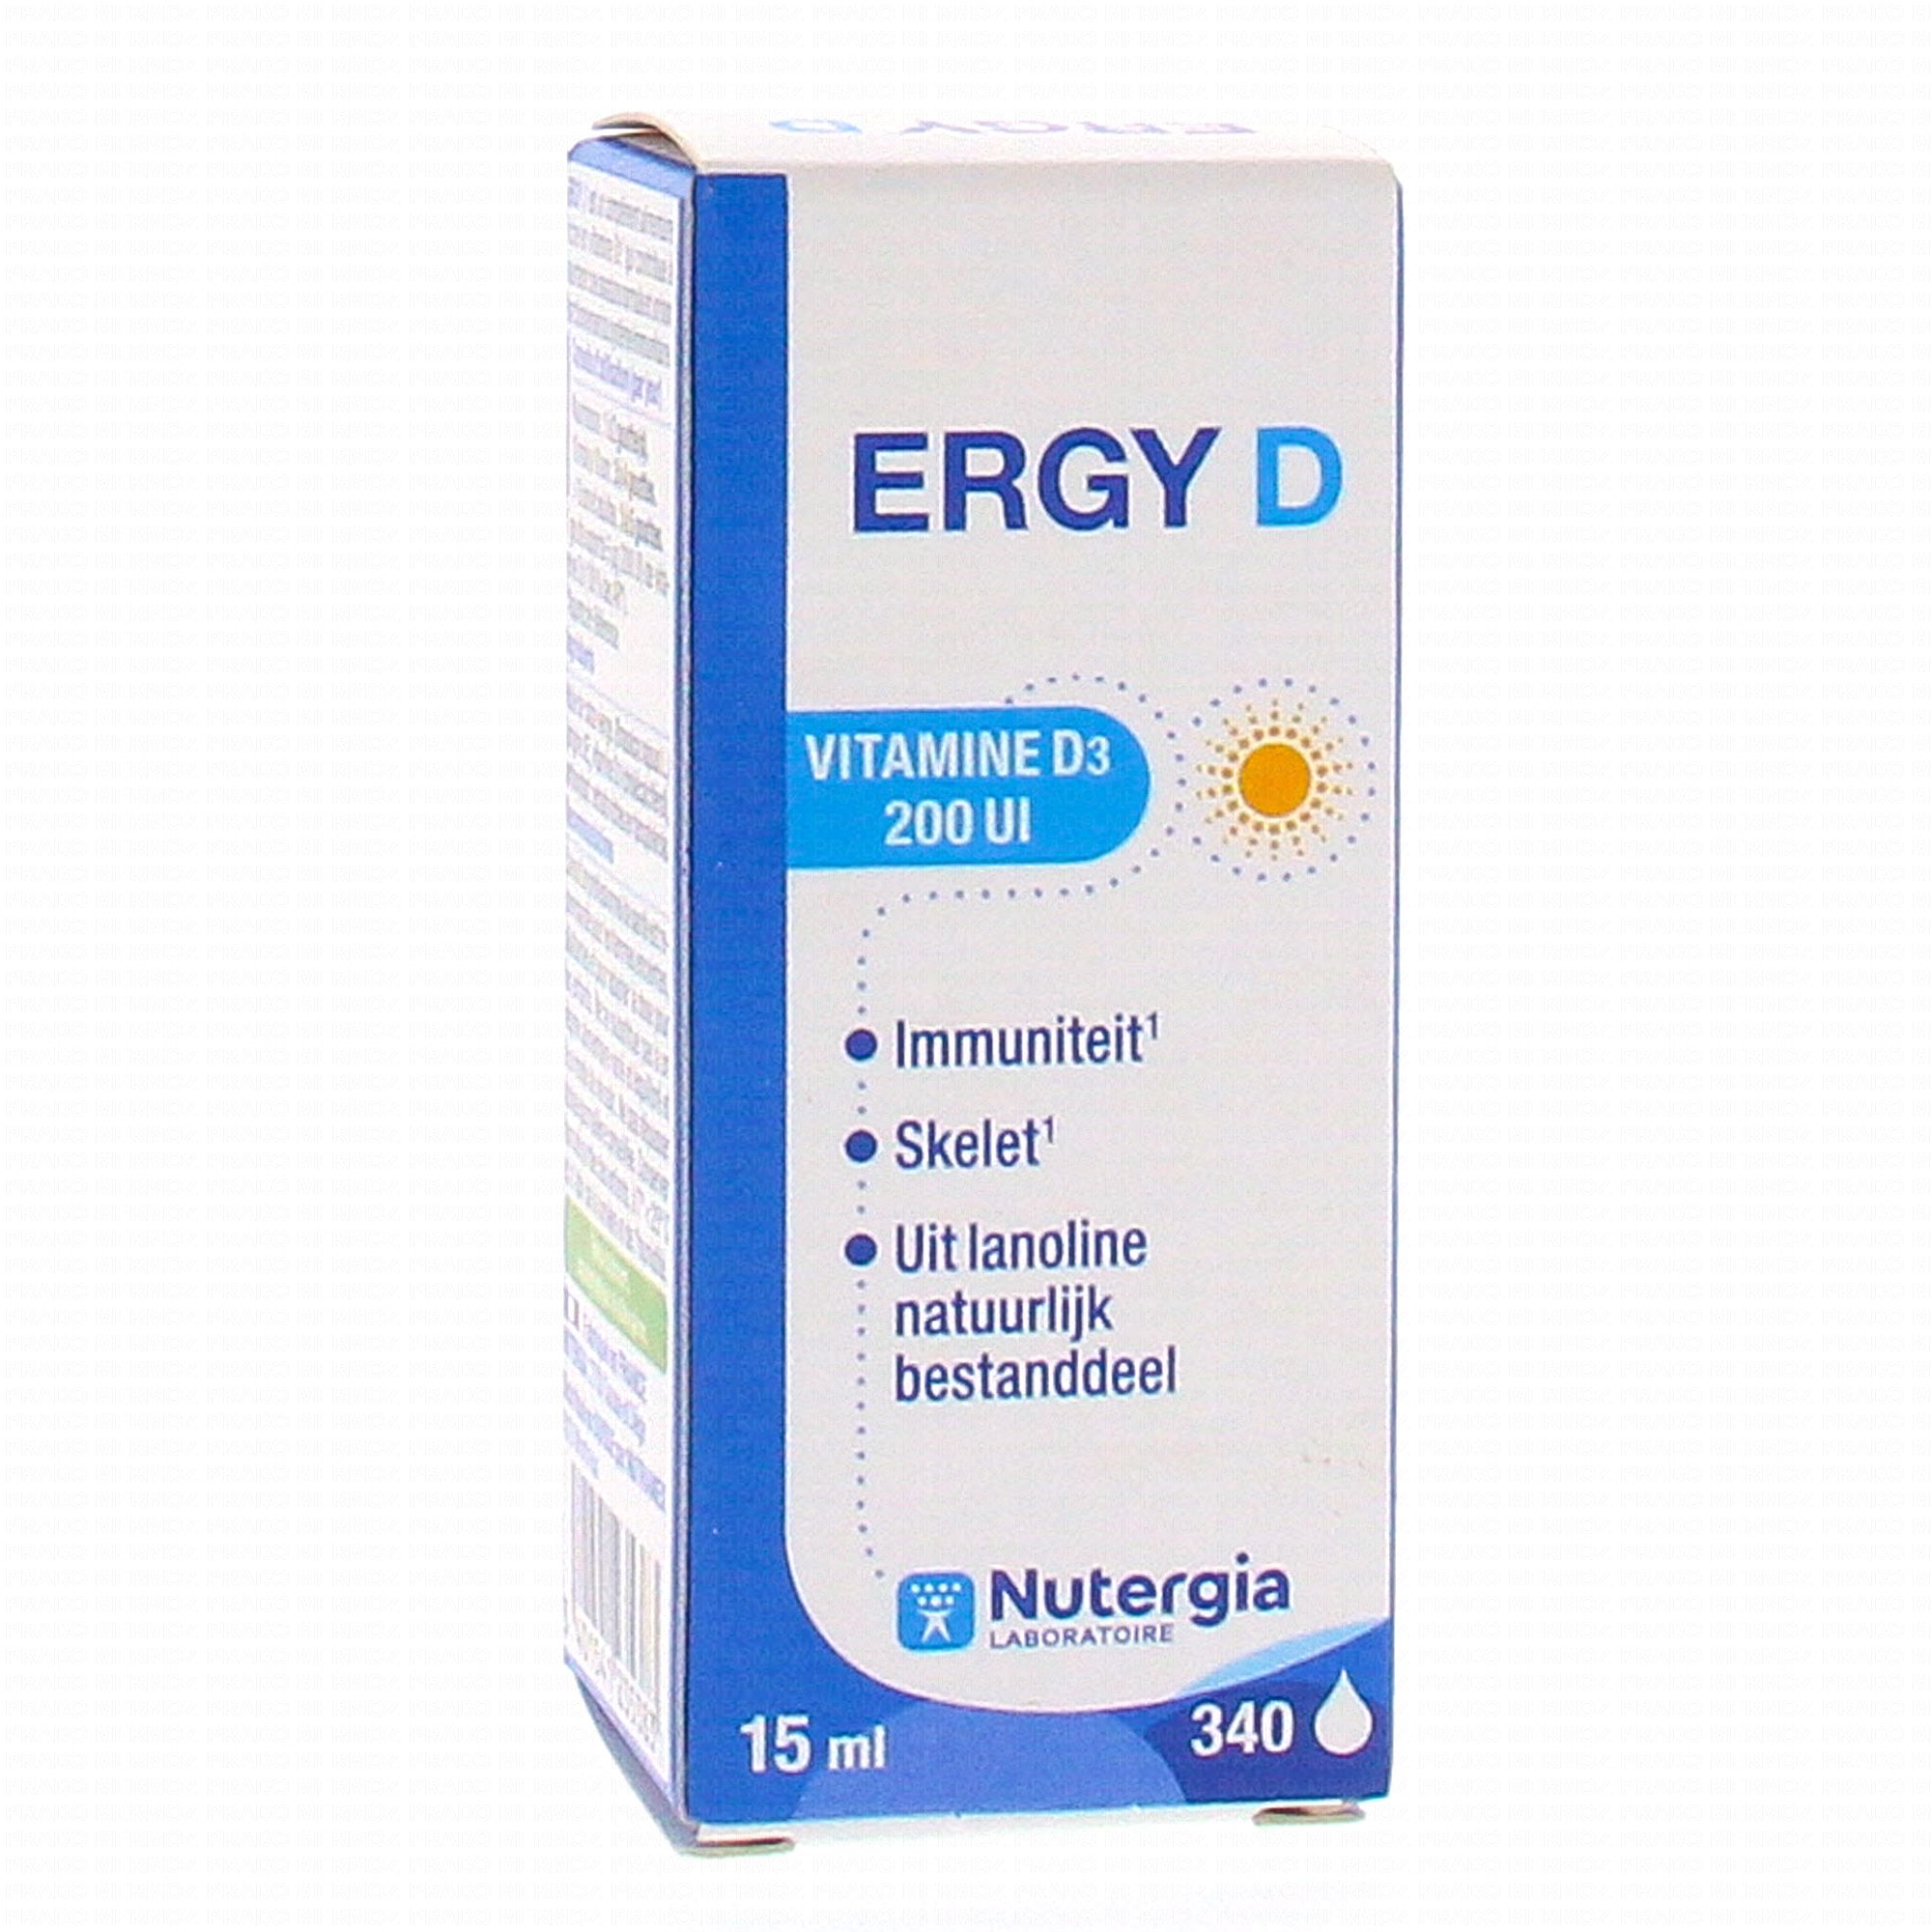 Nutergia Ergy D Vitamine D3 200 UI 15ml - Easypara